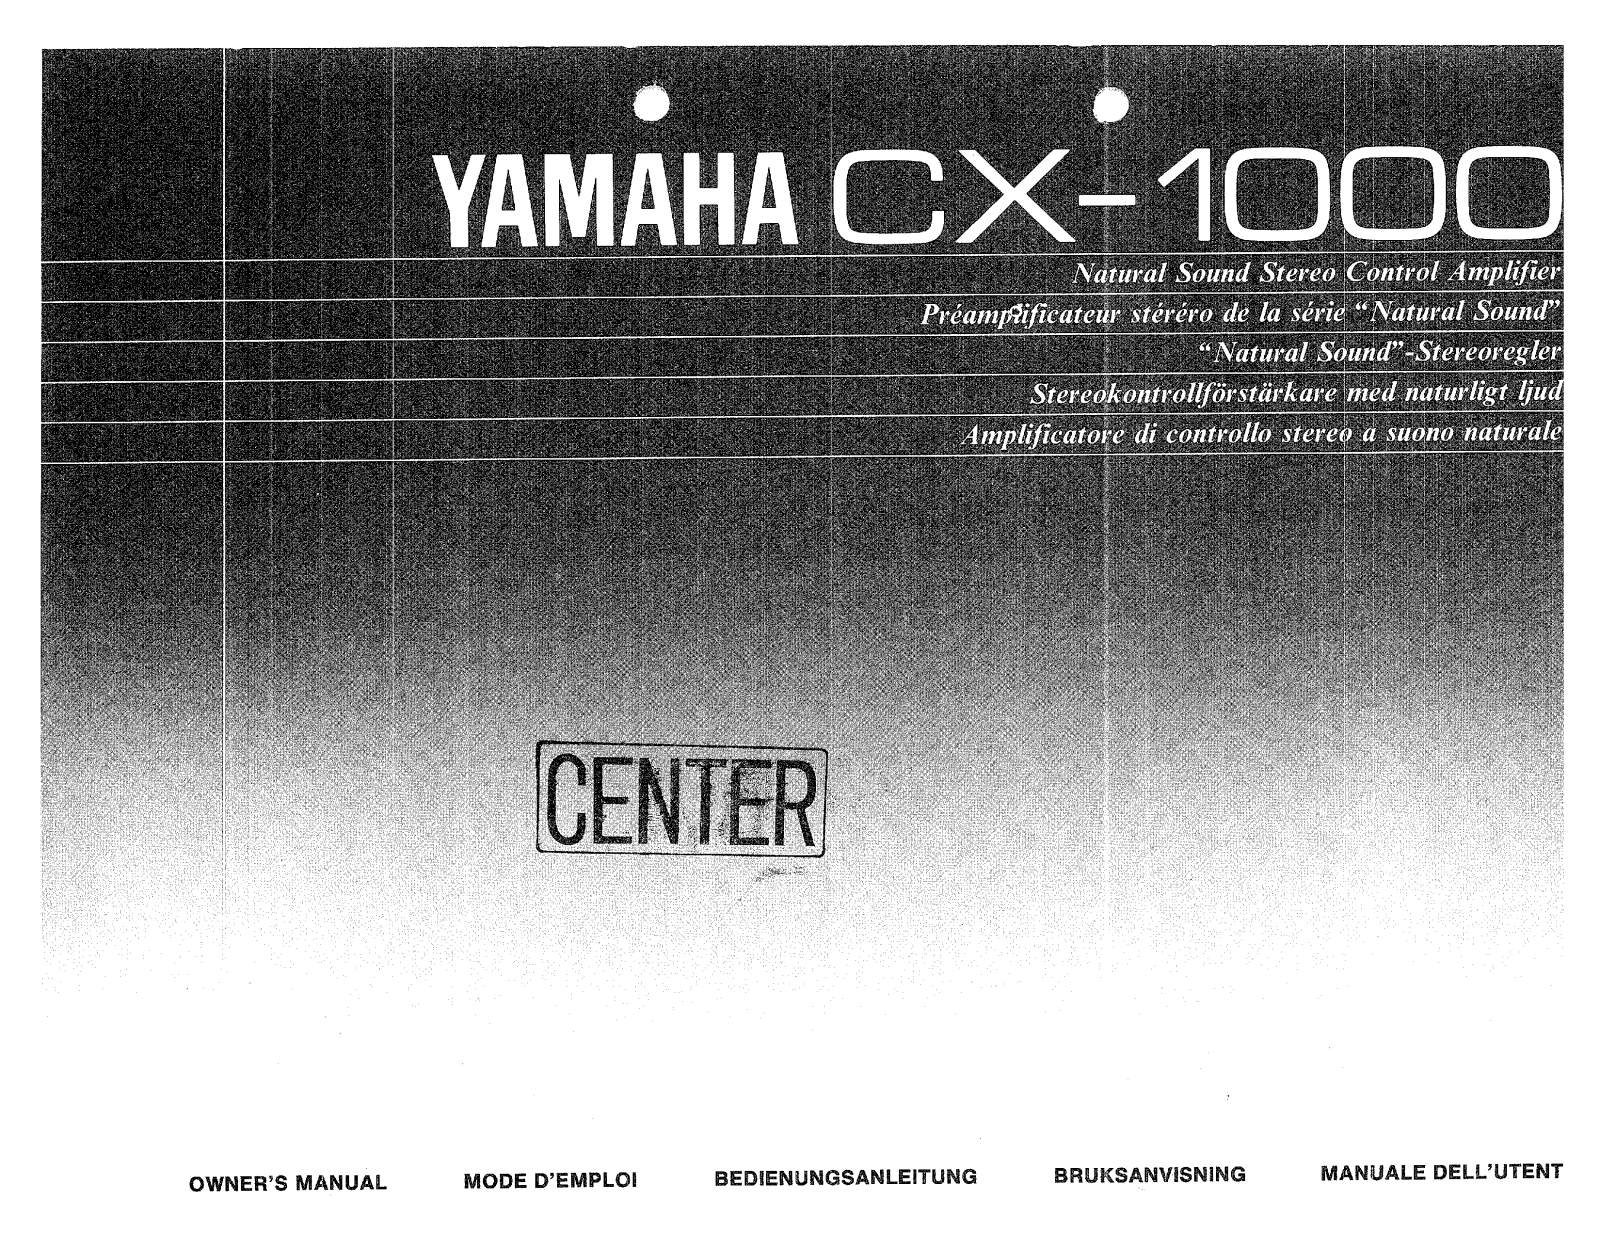 Yamaha CX-1000 Owner Manual